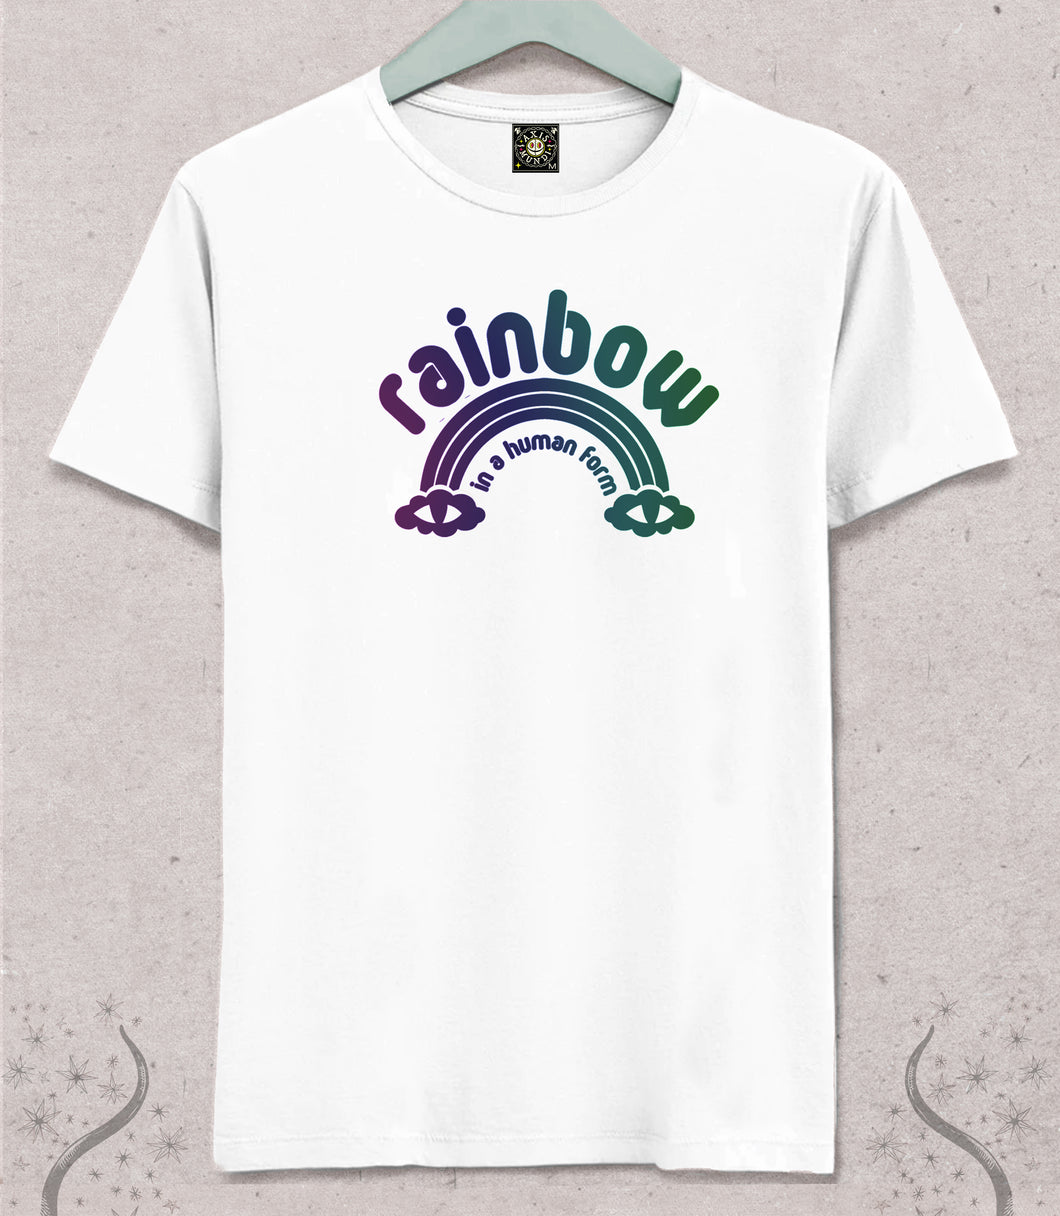 Rainbow pride t-shirt / Reflective !